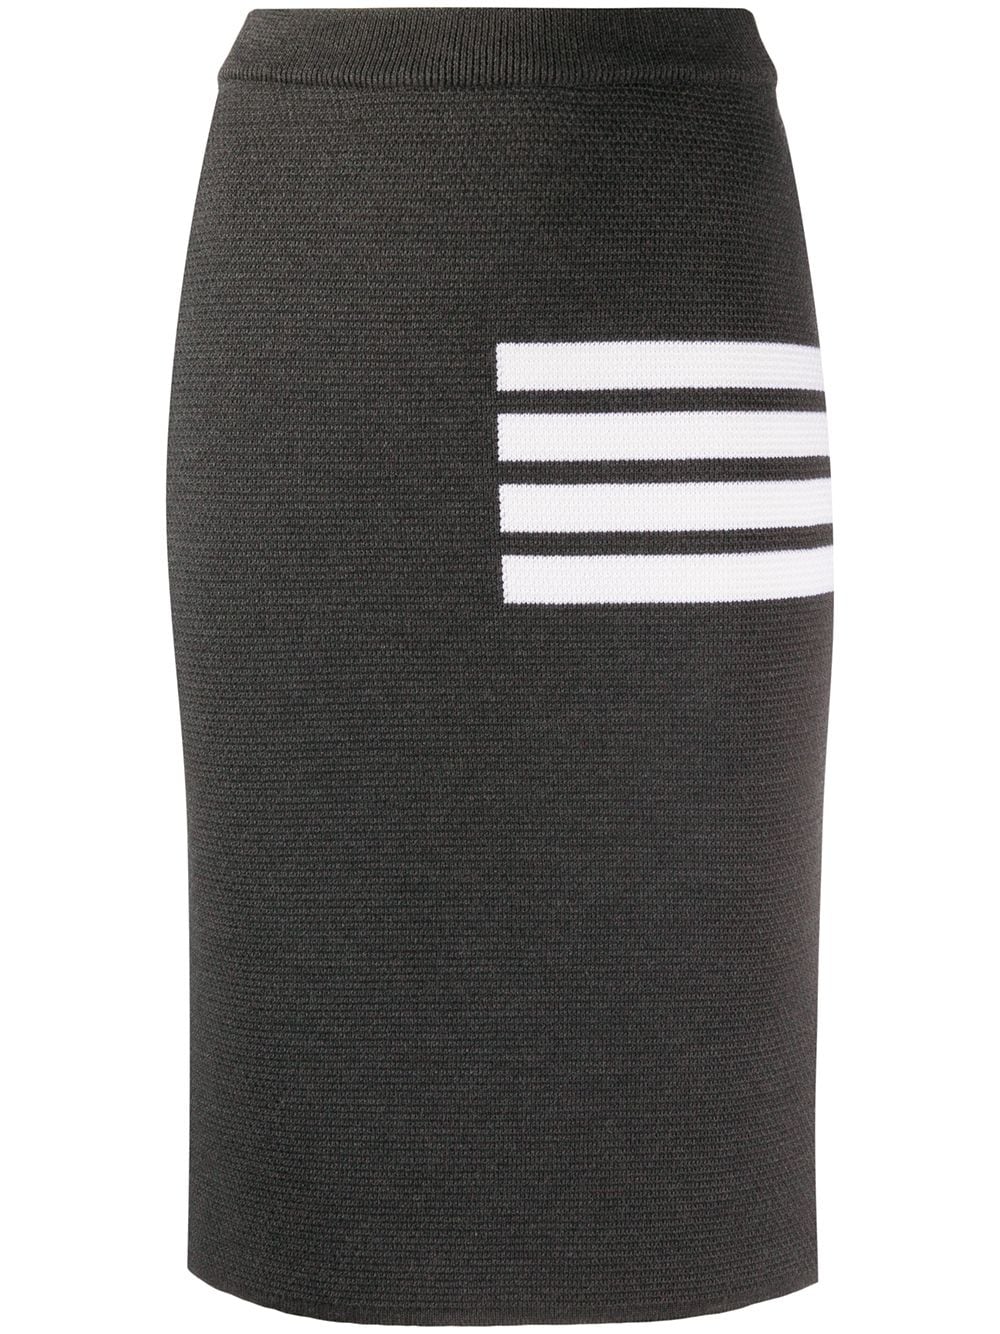 Links Stitch Below Knee Pencil Skirt W/ 4 Bar In Fine Merino Wool Dark Grey